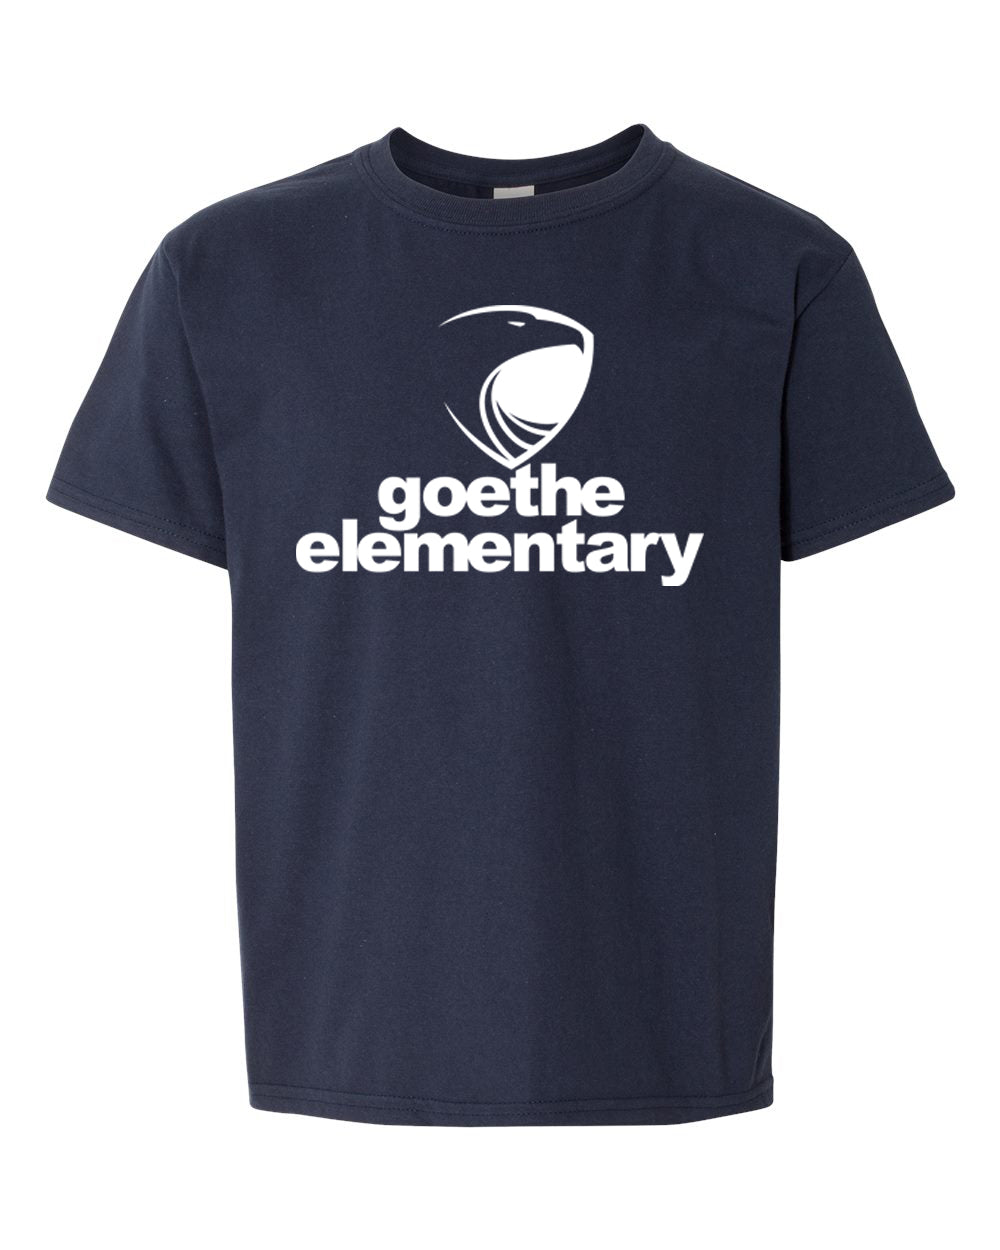 Goethe Elementary - Short Sleeve Youth T-shirt (Navy)